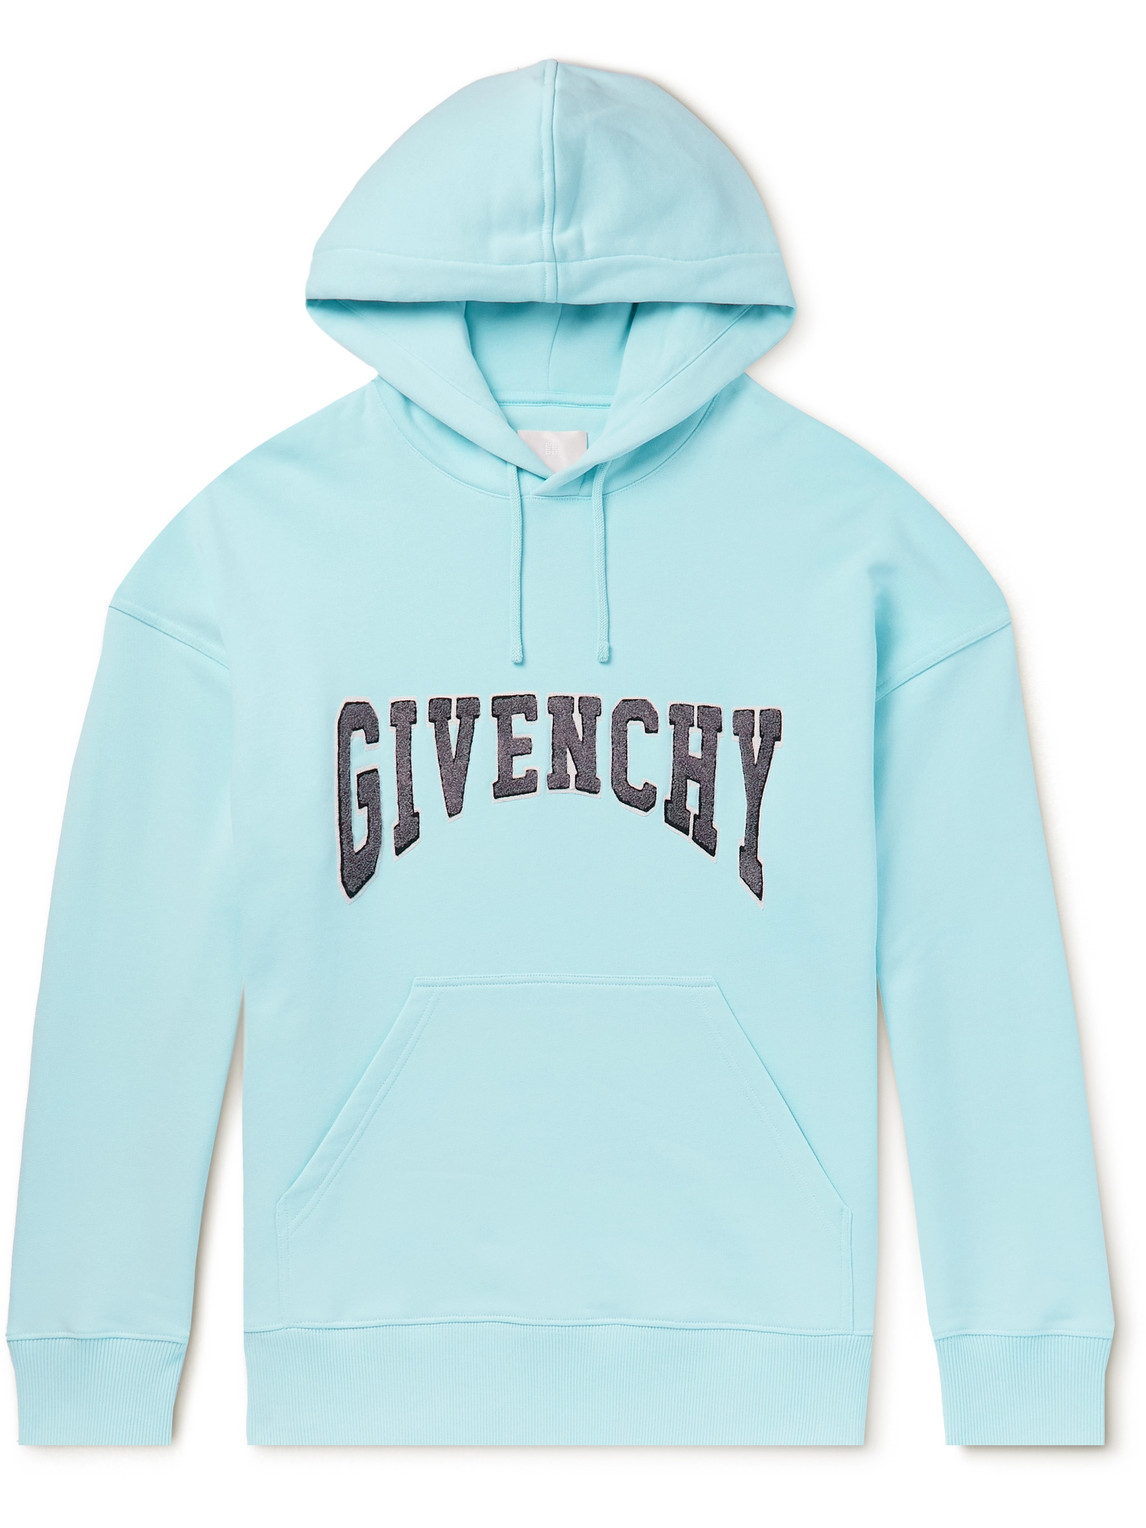 Givenchy - Logo-Appliquéd Cotton-Jersey Hoodie - Men - Blue - S